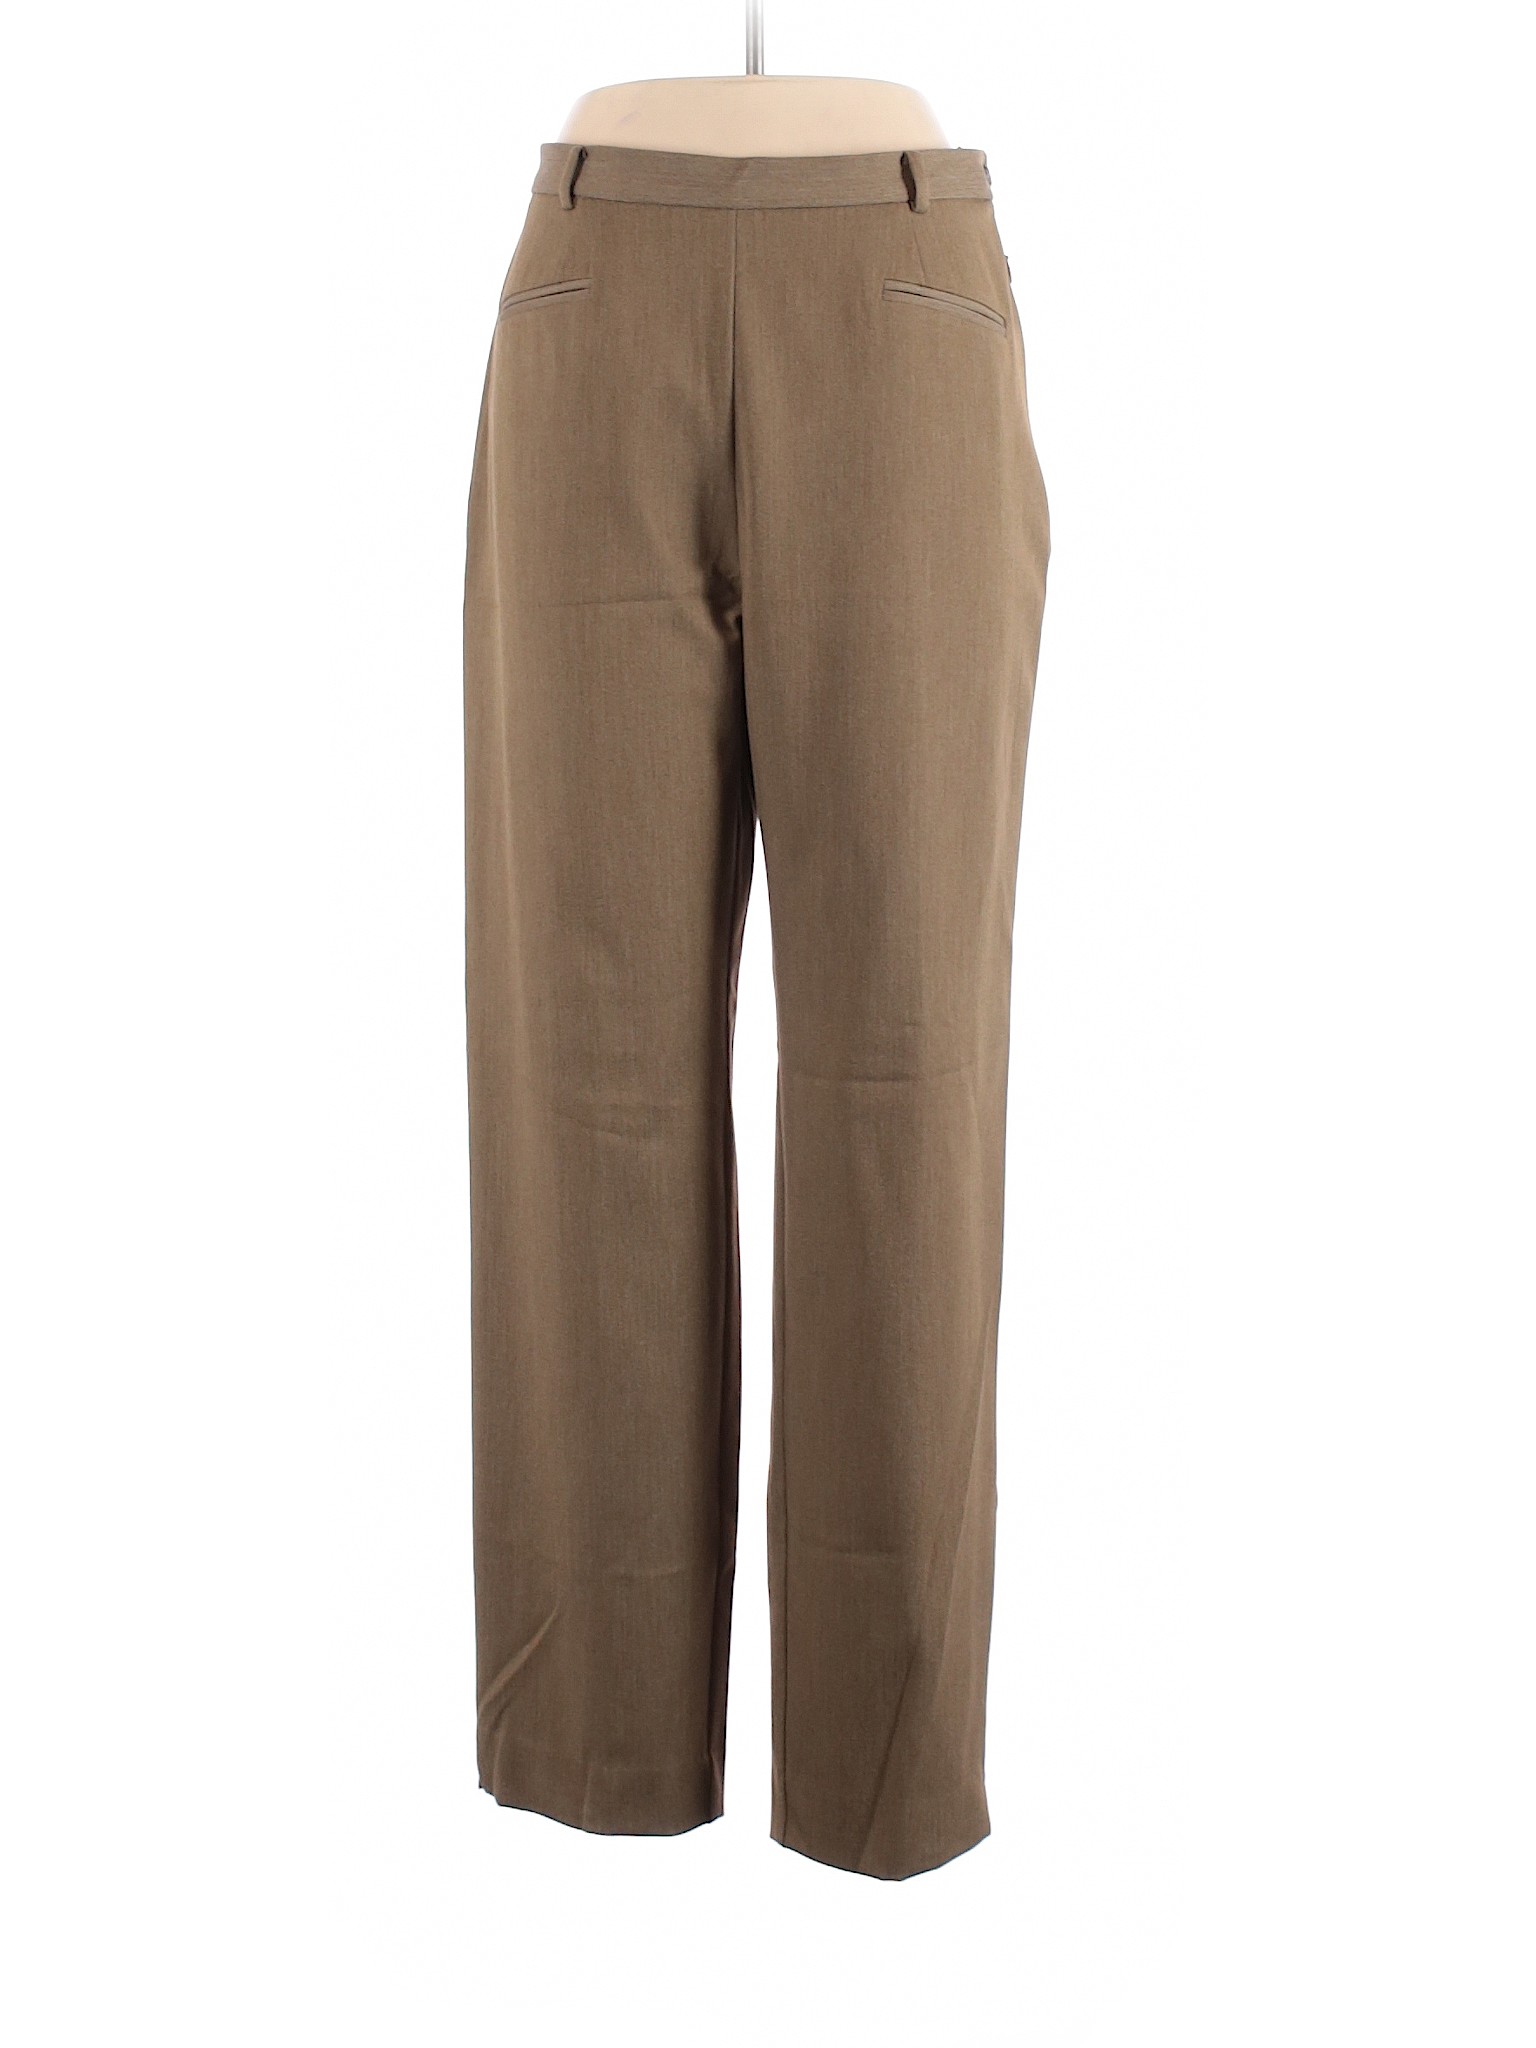 Sigrid Olsen Women Brown Dress Pants 12 | eBay